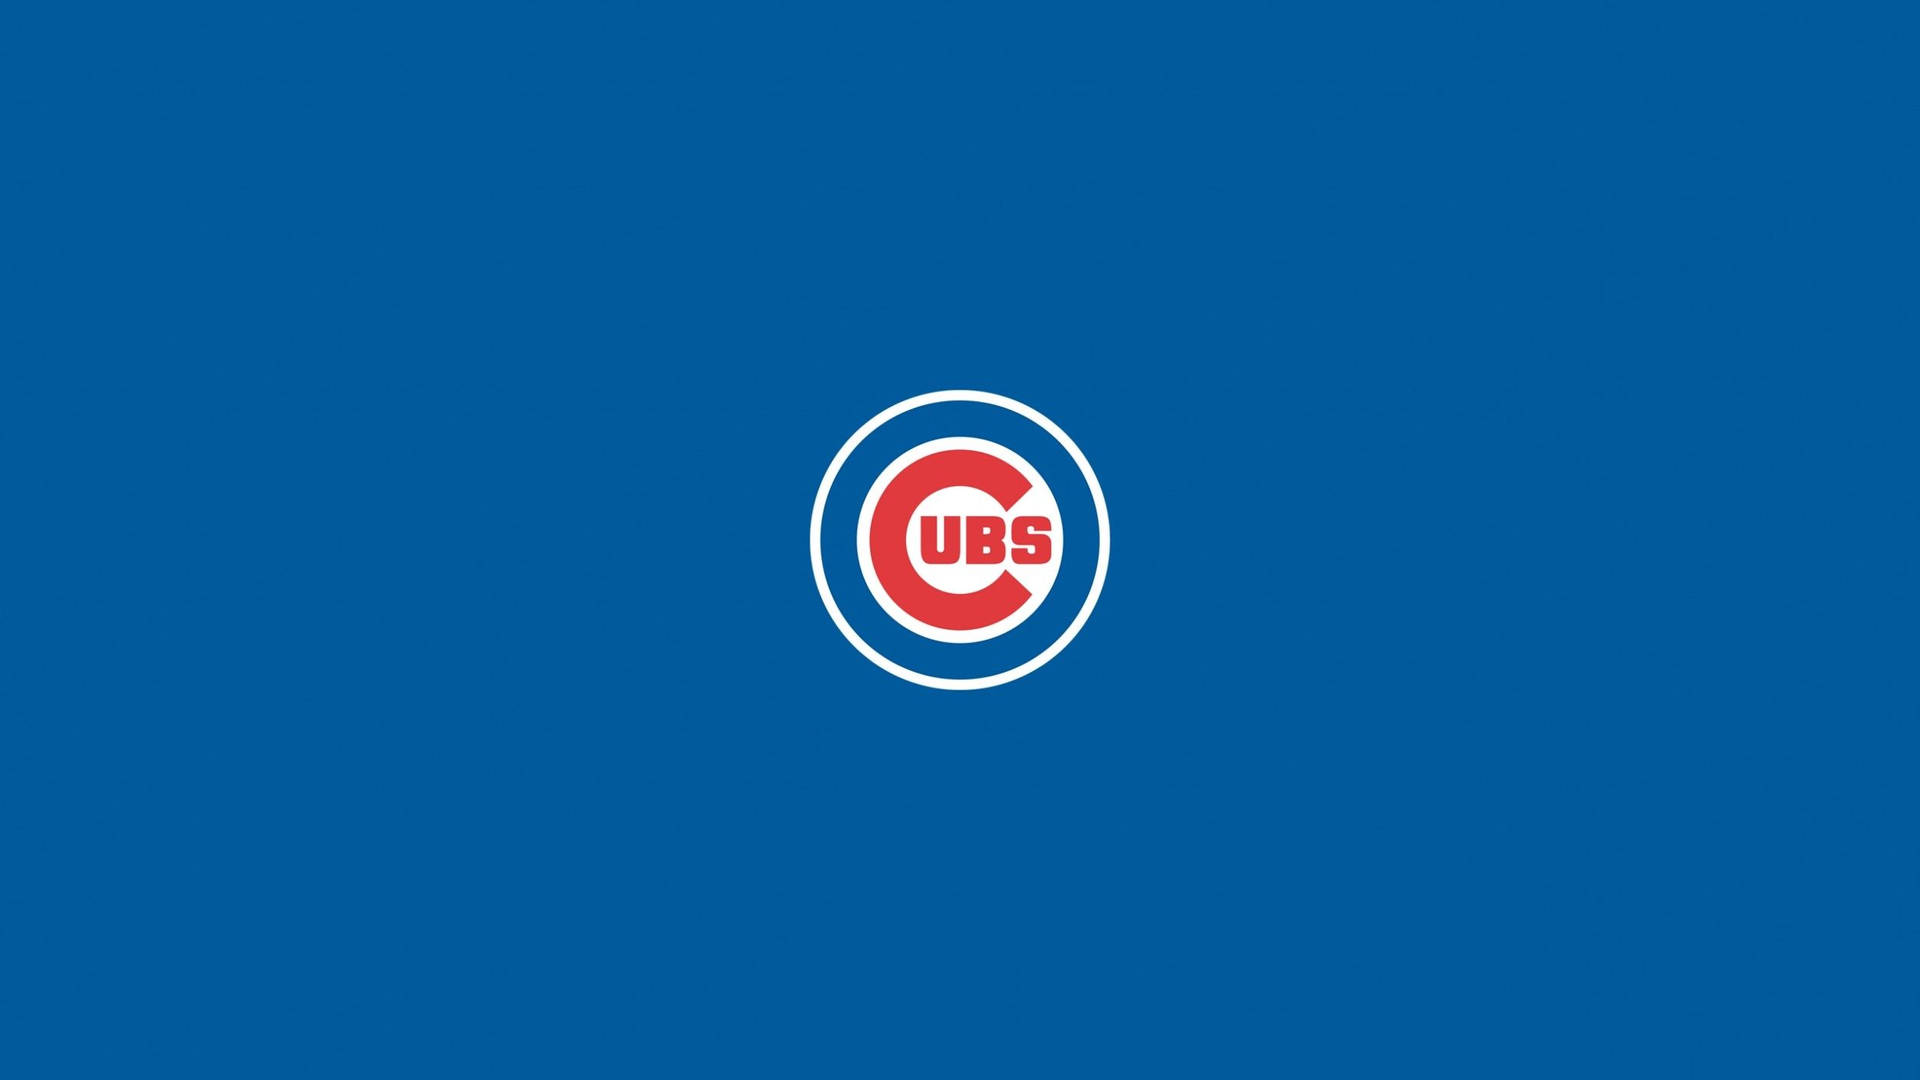 Small Chicago Cubs Logo Wallpaper